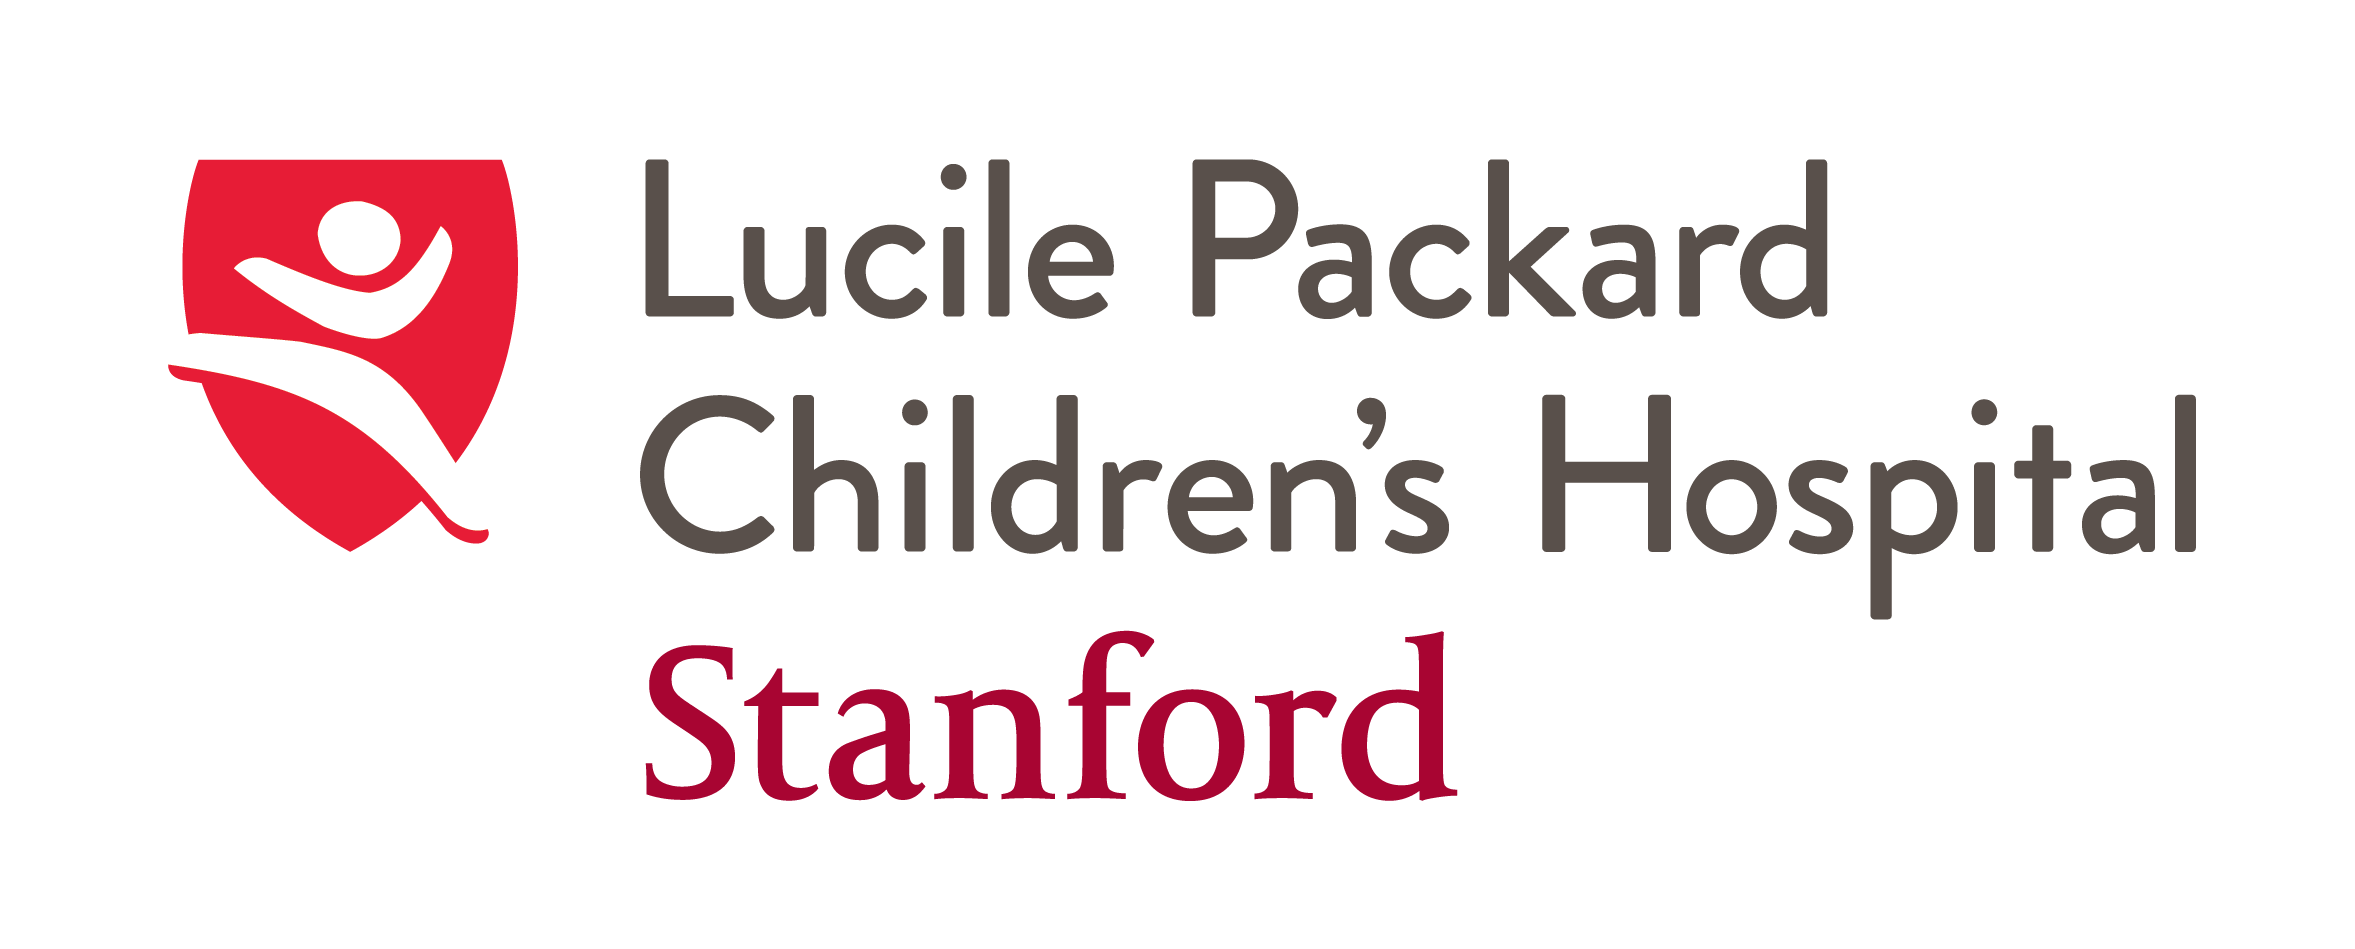 Stanford Childrens Hospital logo